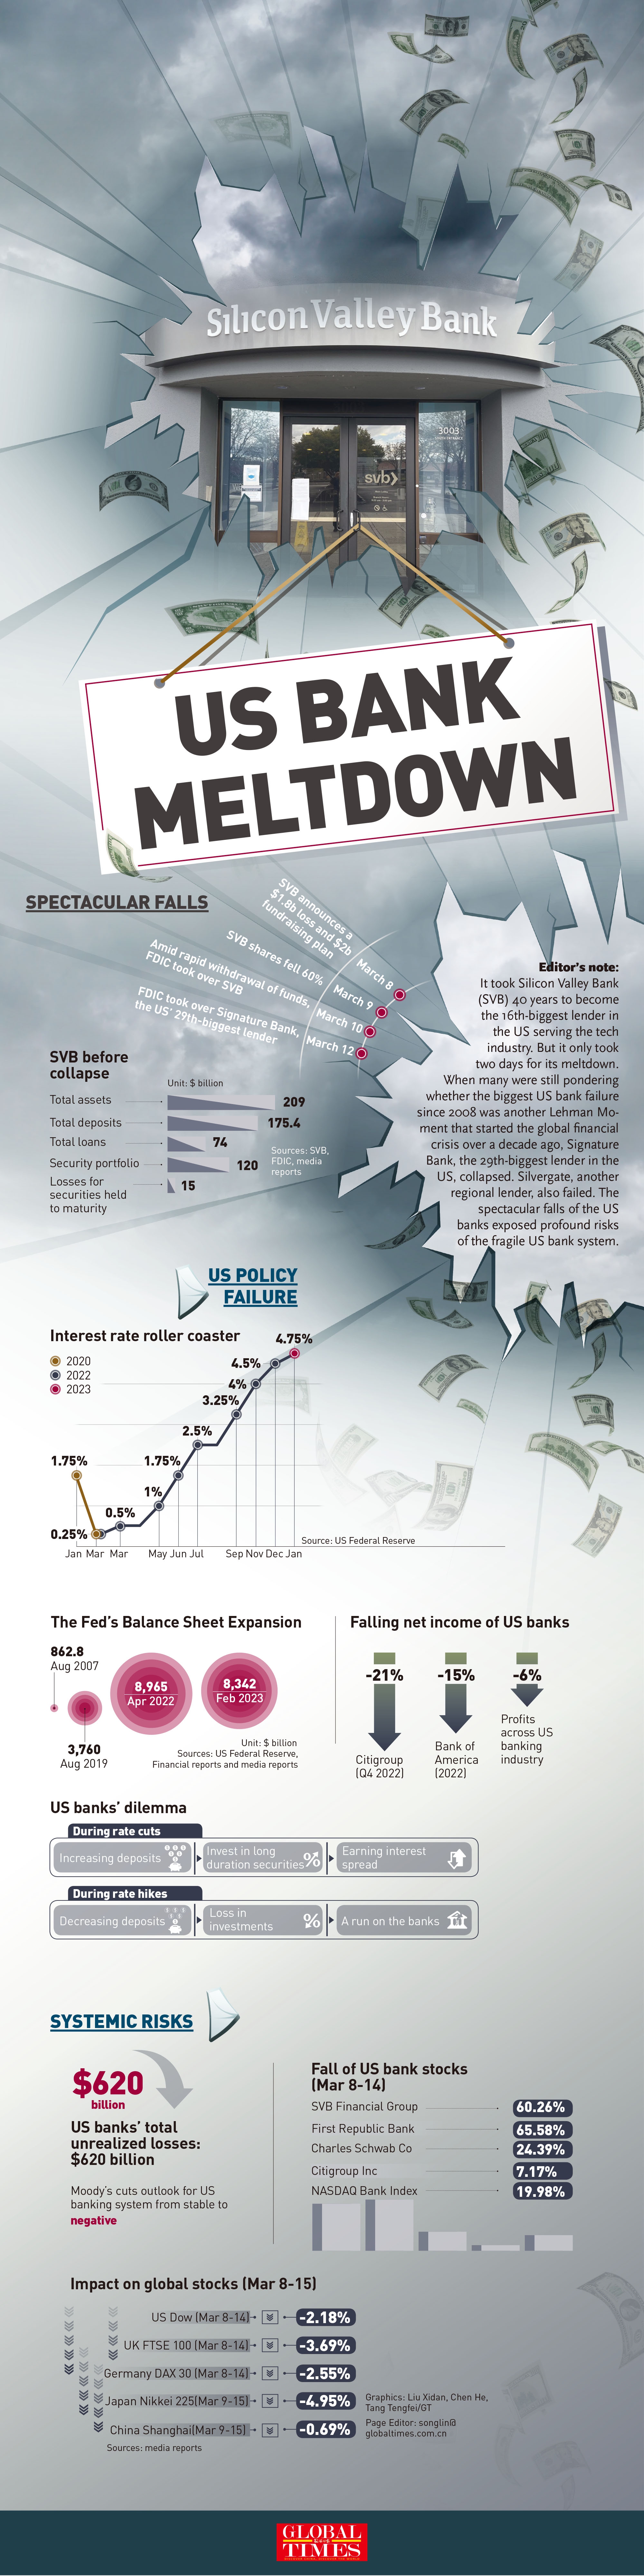 Infographic: SVB meltdown exposes risks of fragile US bank system  Infographic: GT